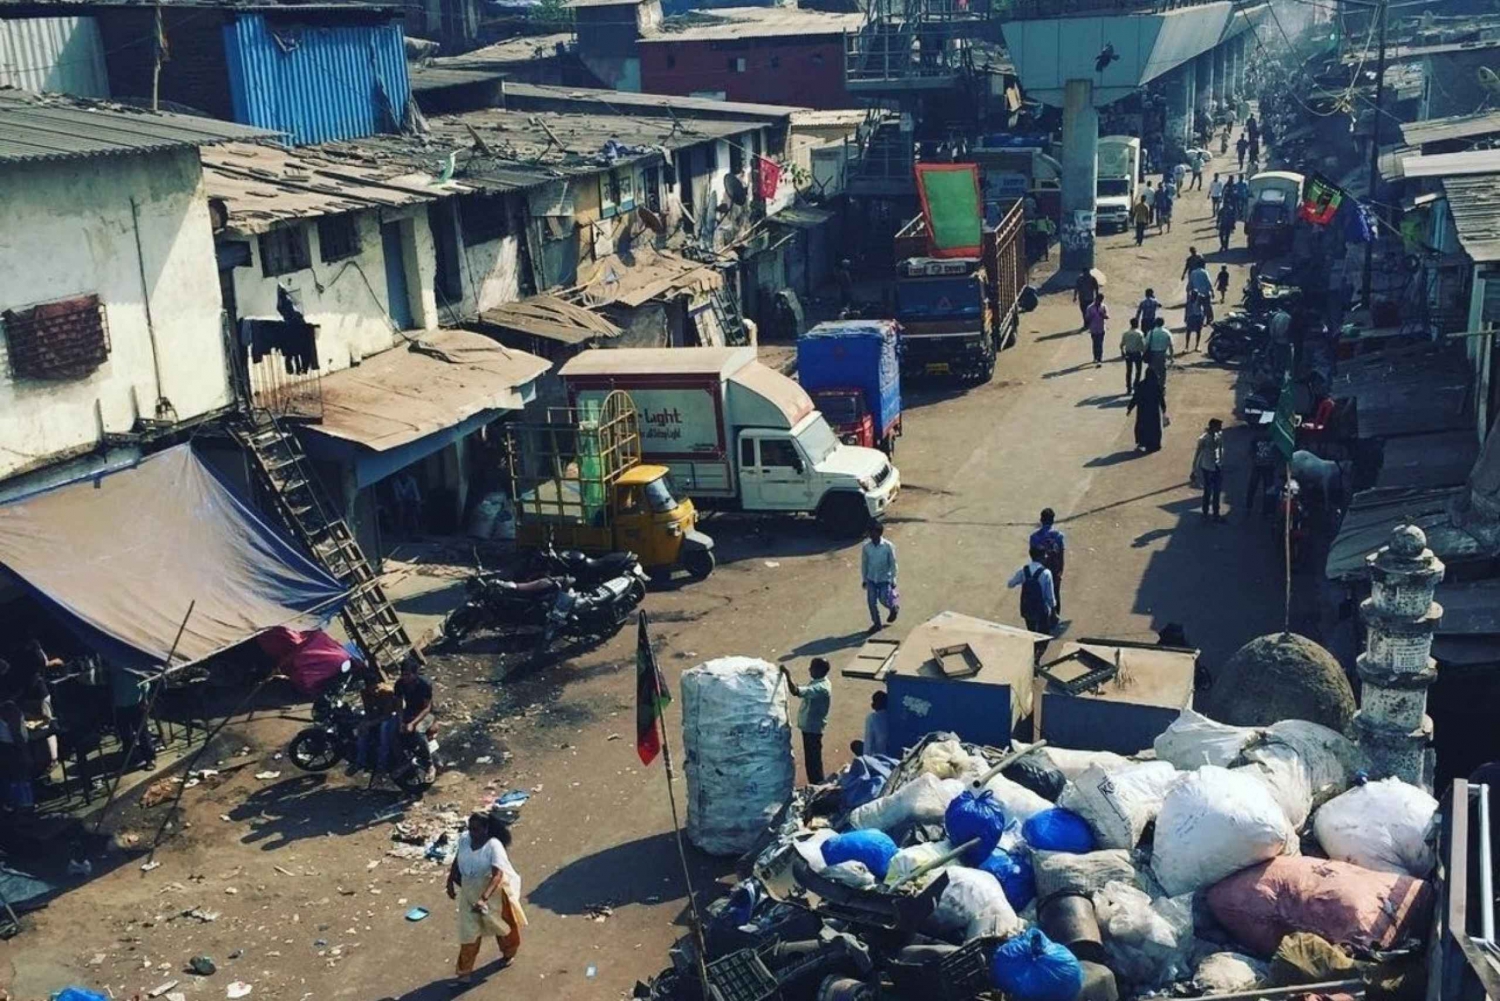 Mumbai: Sightseeing and Dharavi Slum Tour